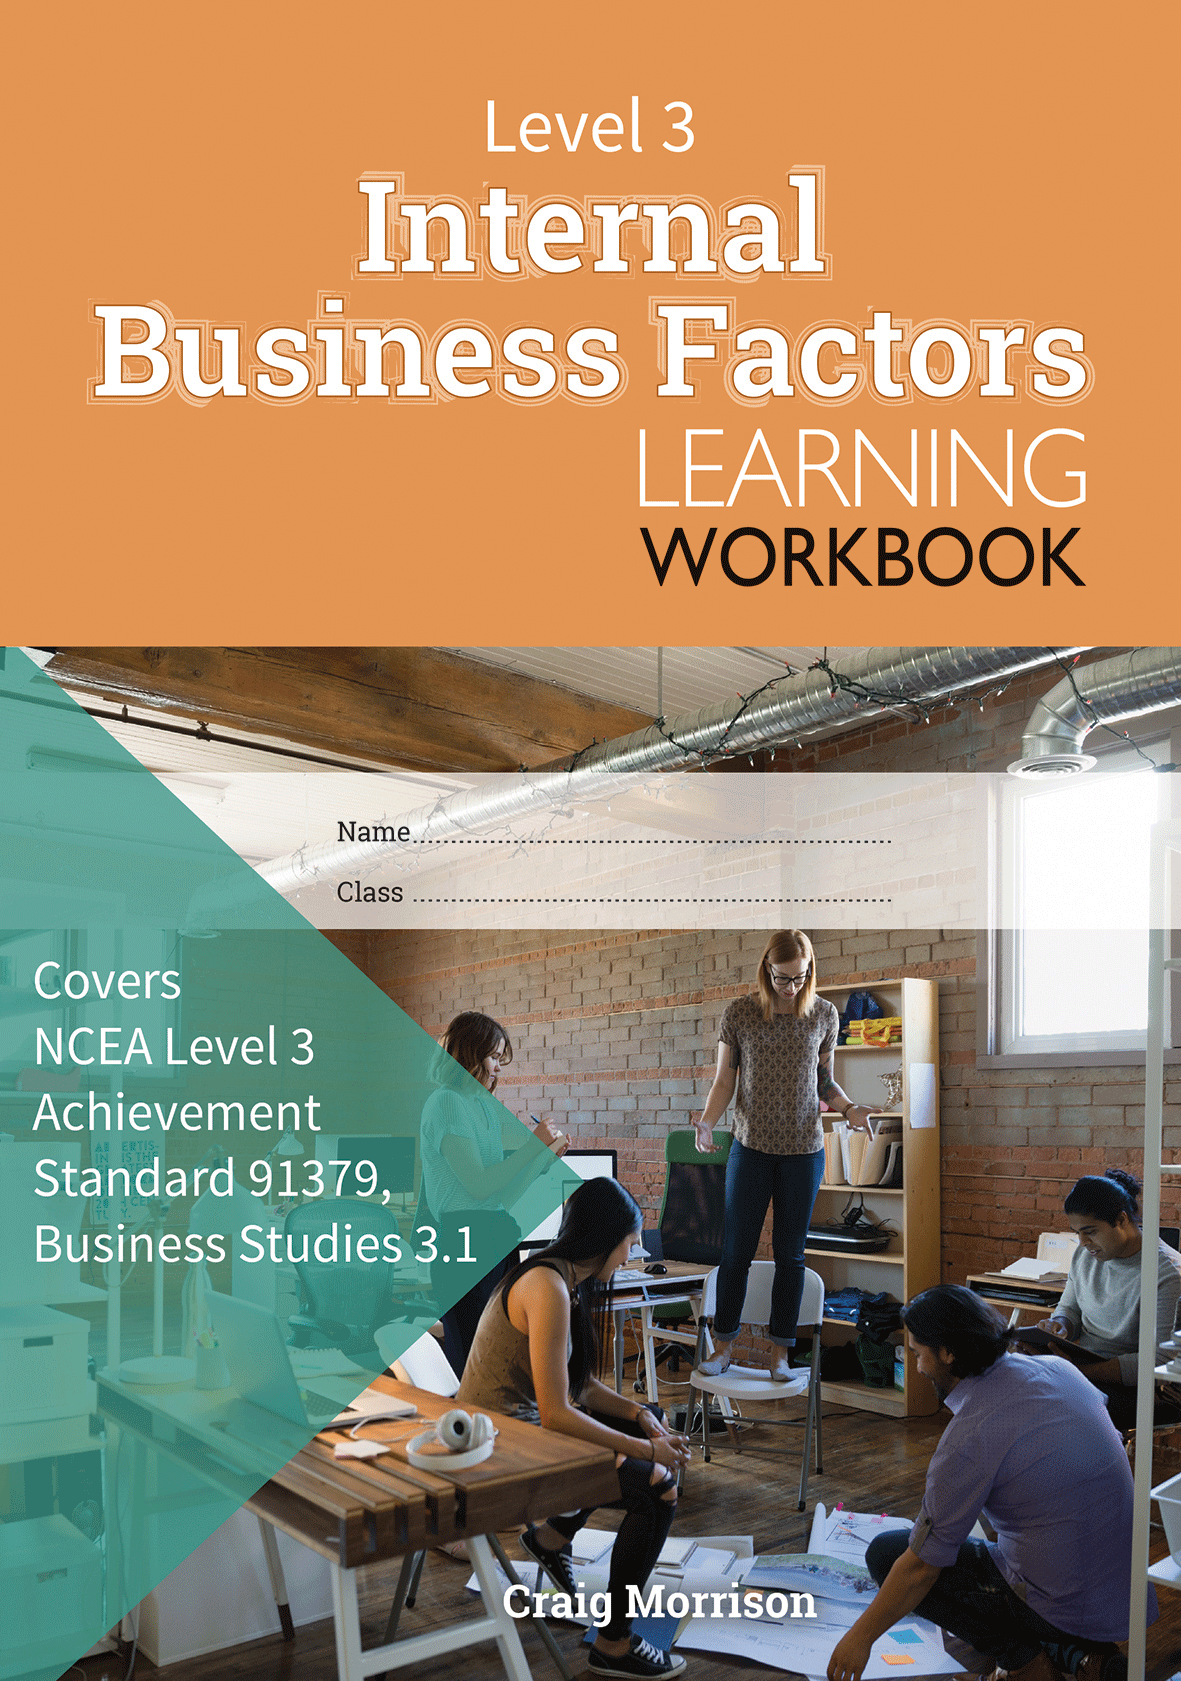 Level 3 Internal Business Factors 3.1 Learning Workbook